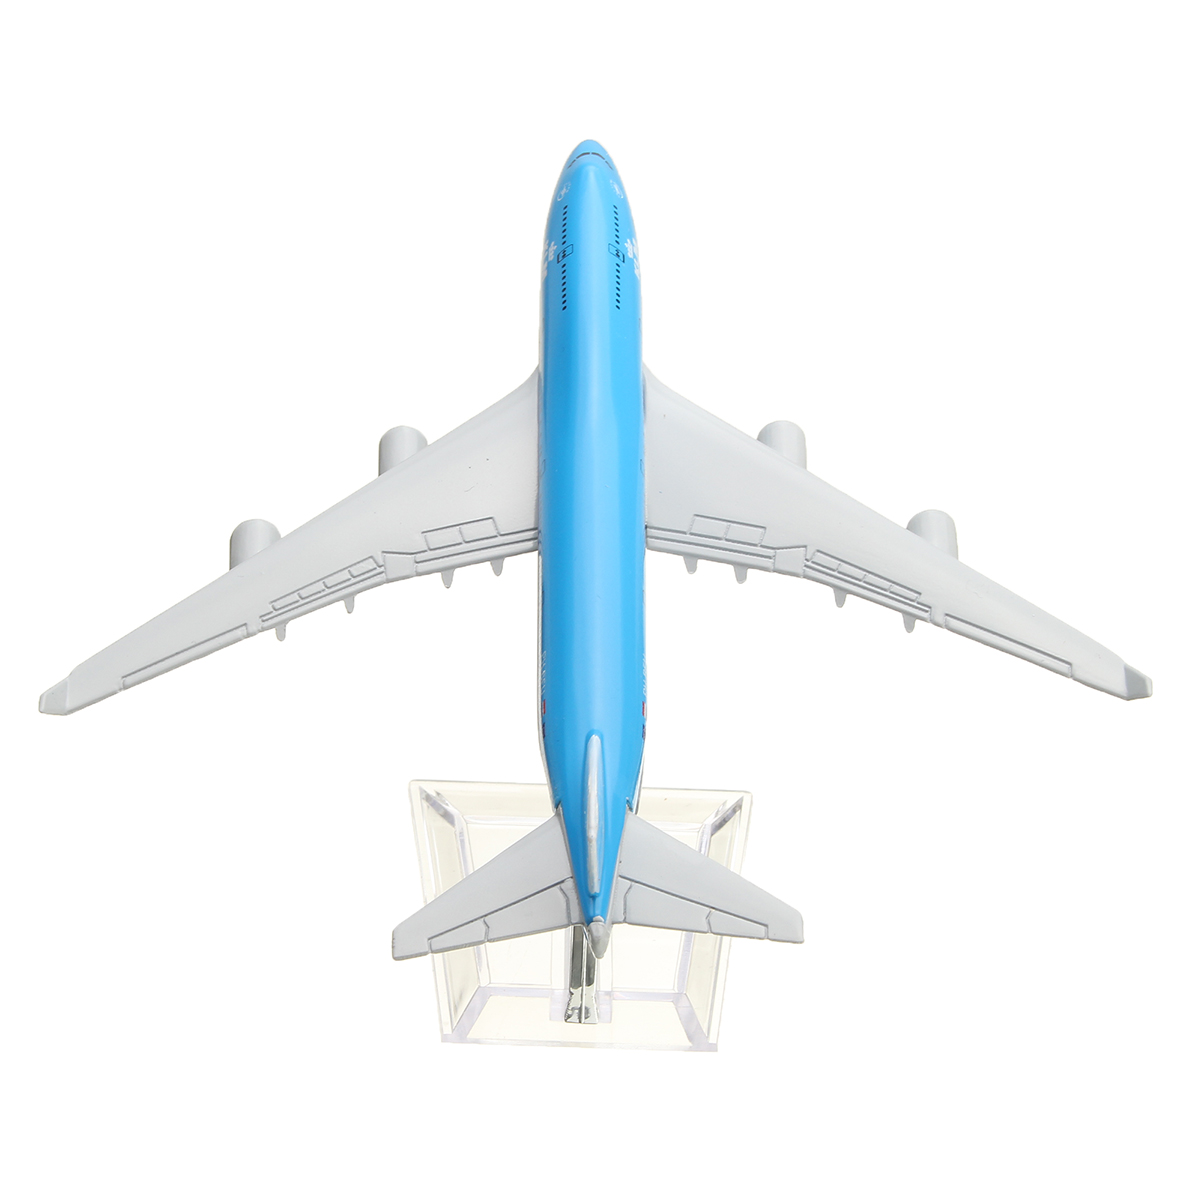 NEW-16cm-Airplane-Metal-Plane-Model-Aircraft-B747-KLM-Aeroplane-Scale-Airplane-Desk-Toy-1102722-5